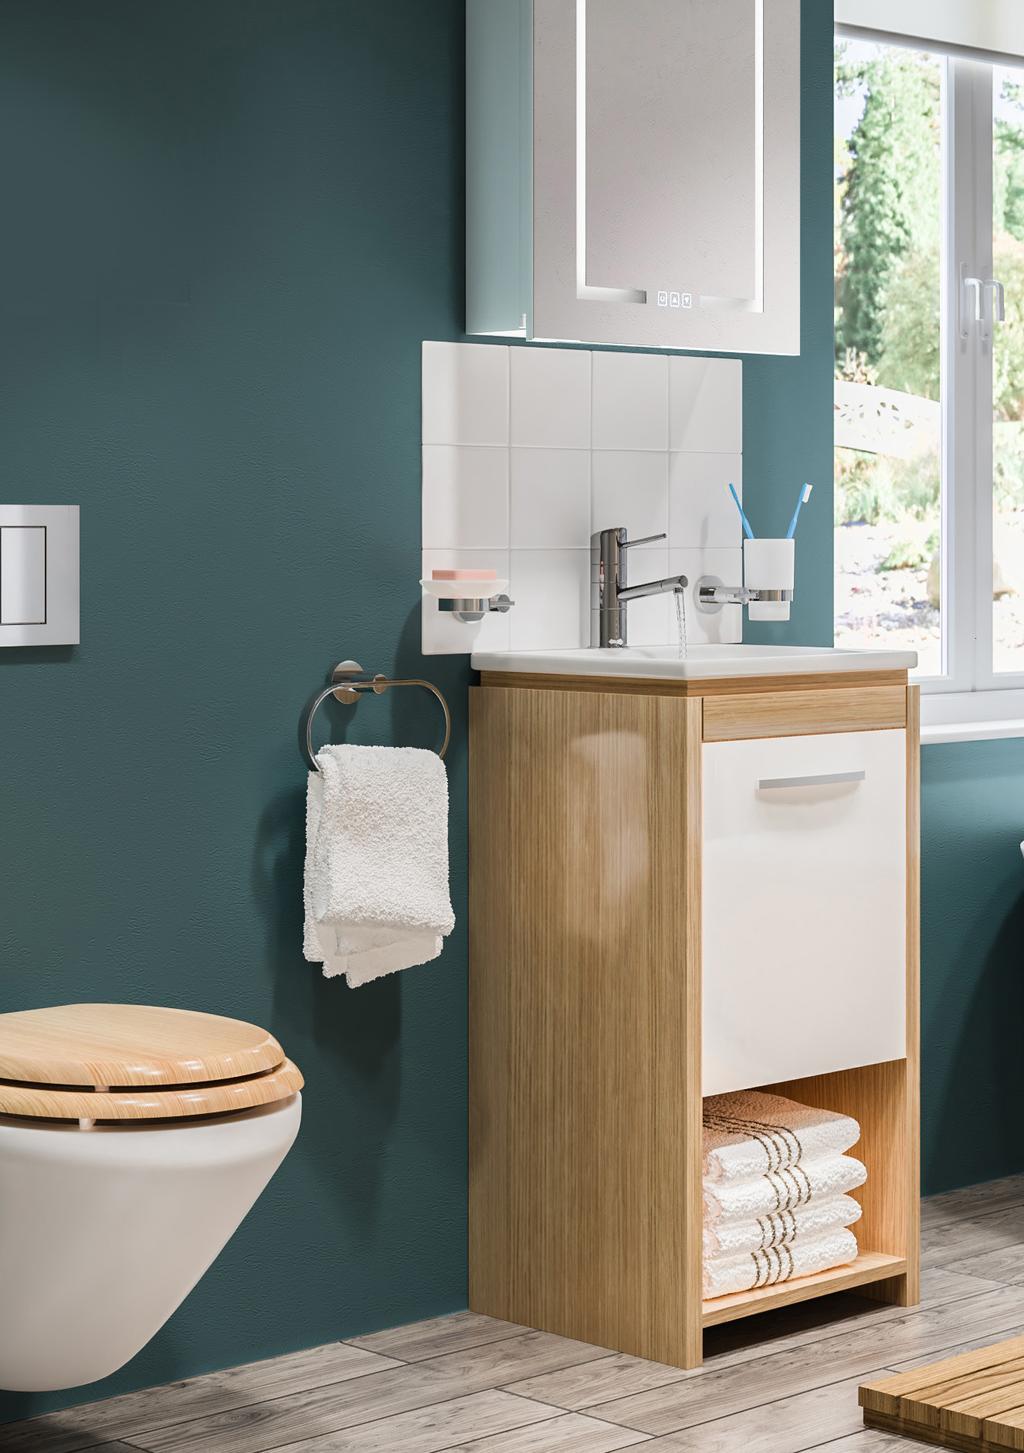 BATHROOM FURNITURE Add statement bathroom furniture for a versatile design solution.